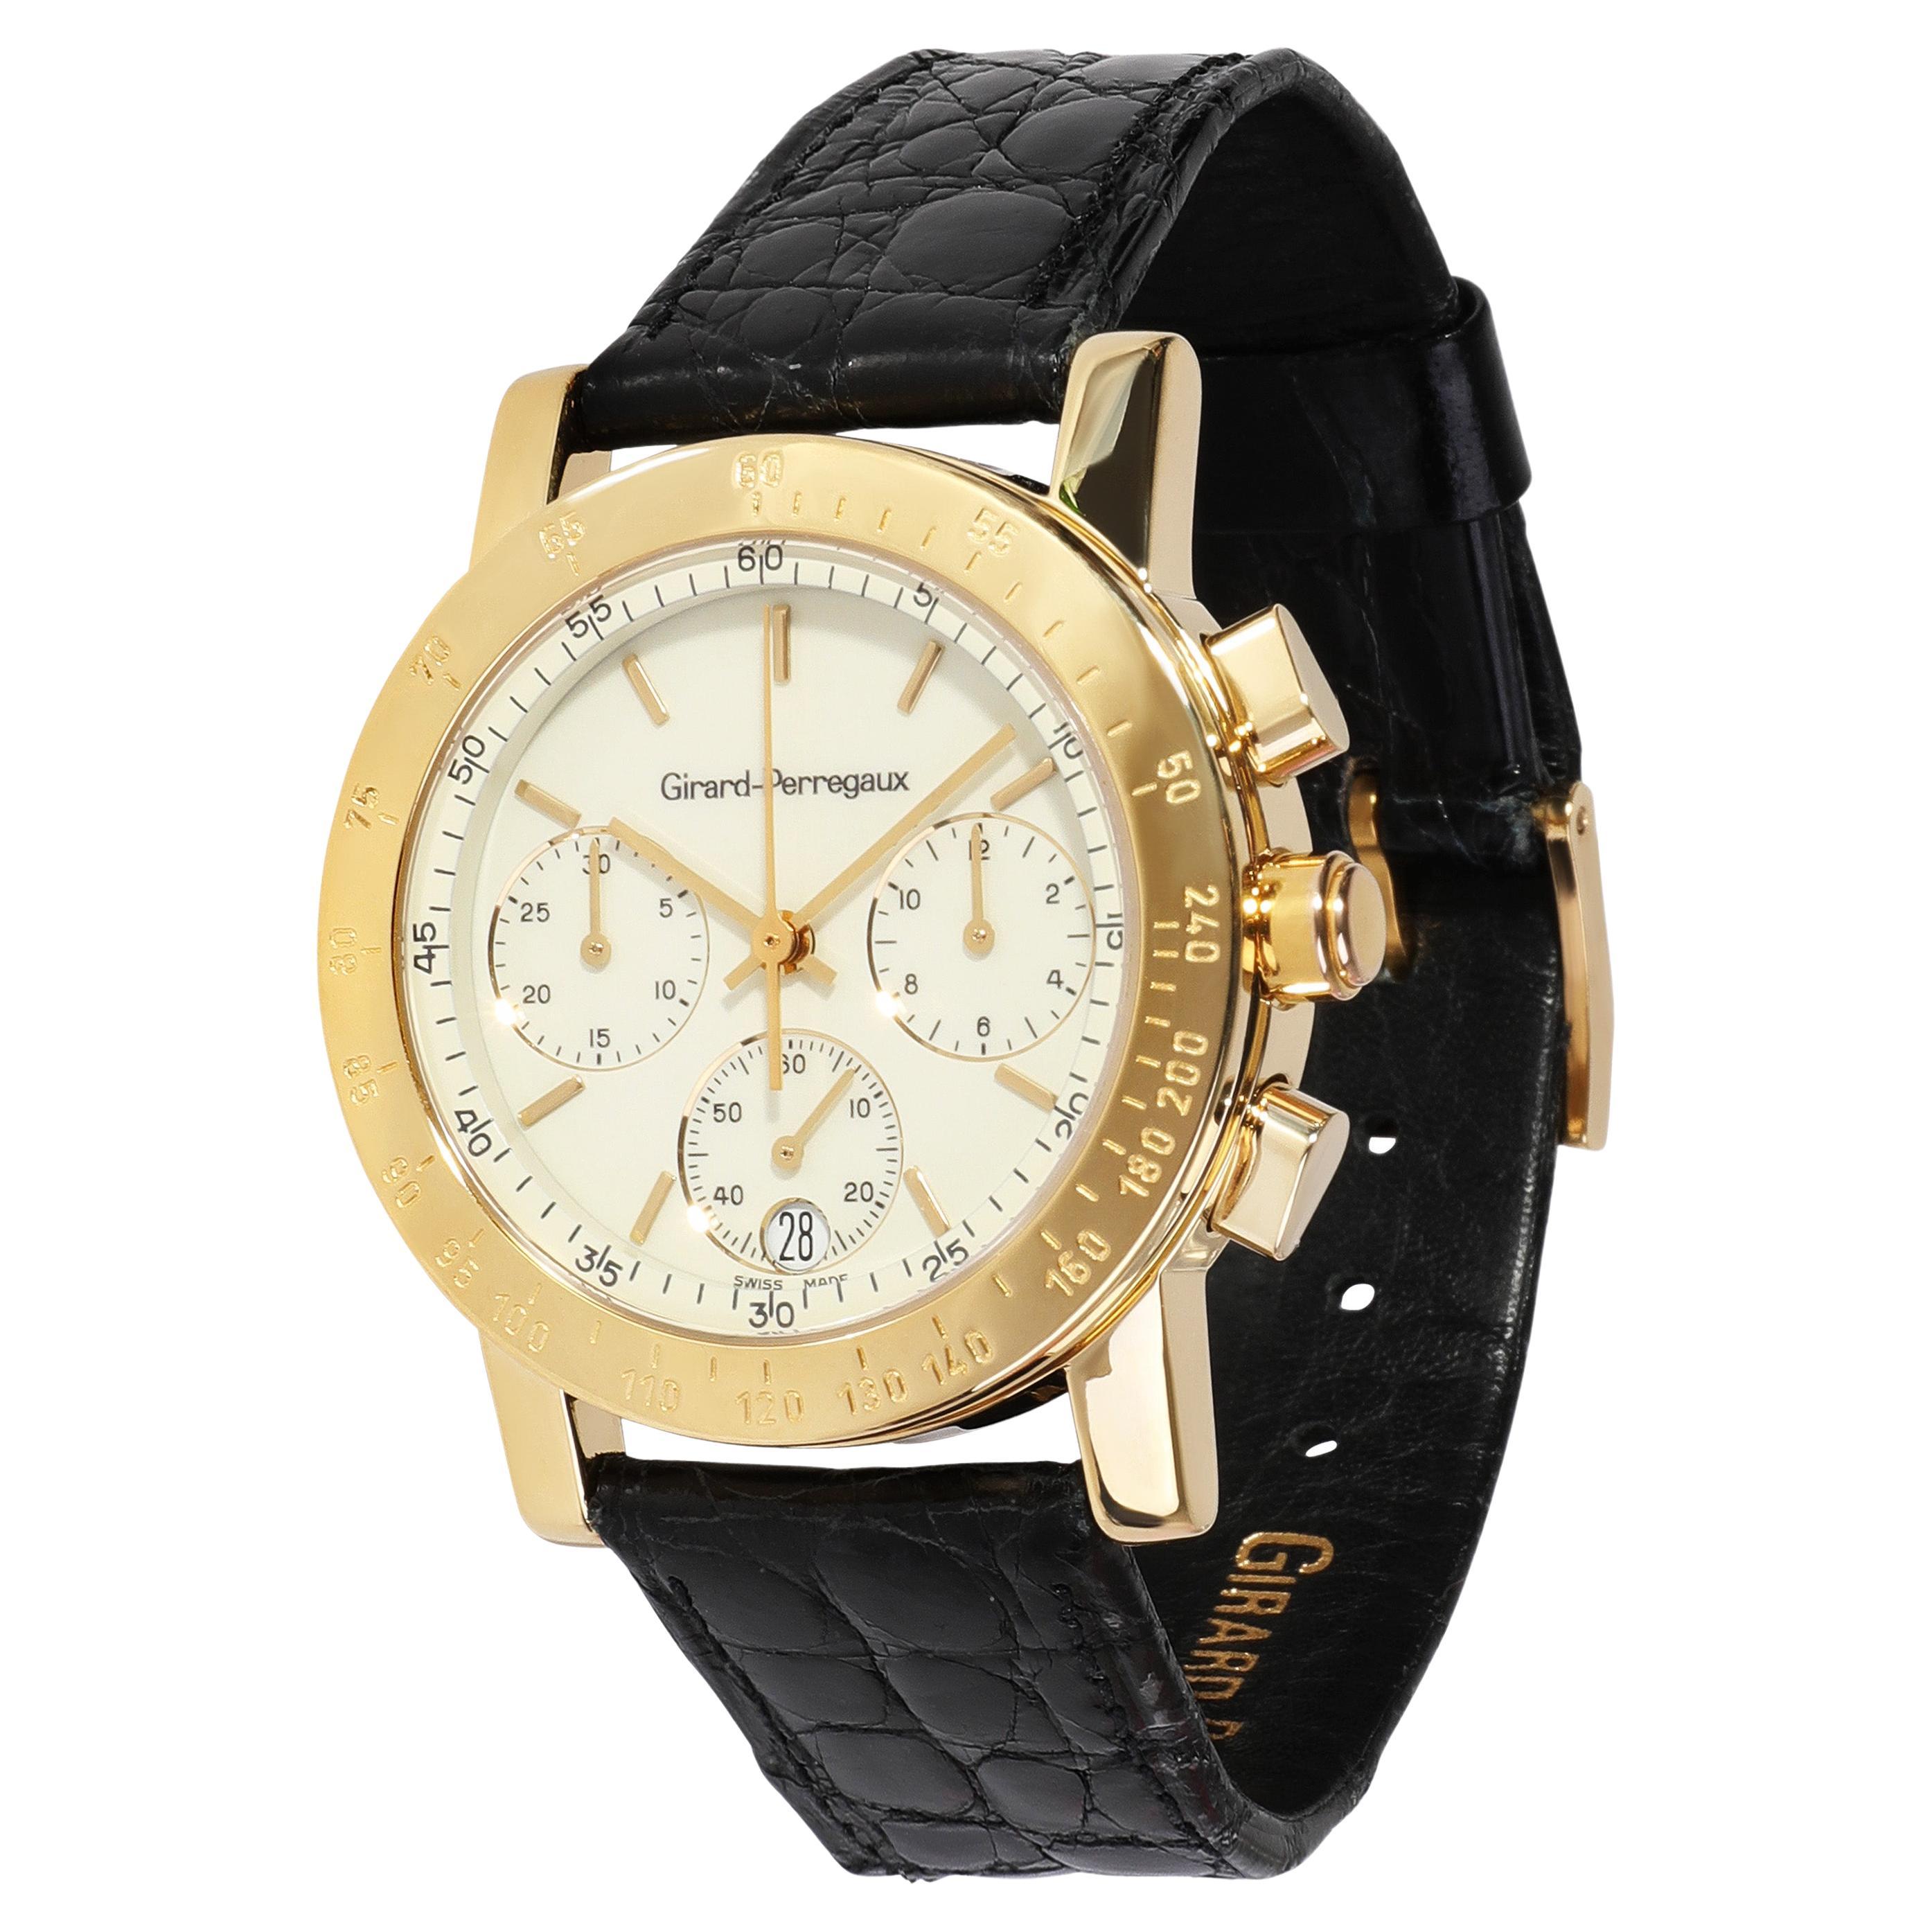 Girard Perregaux GP 7700 700 Unisex Watch in 18kt Yellow Gold